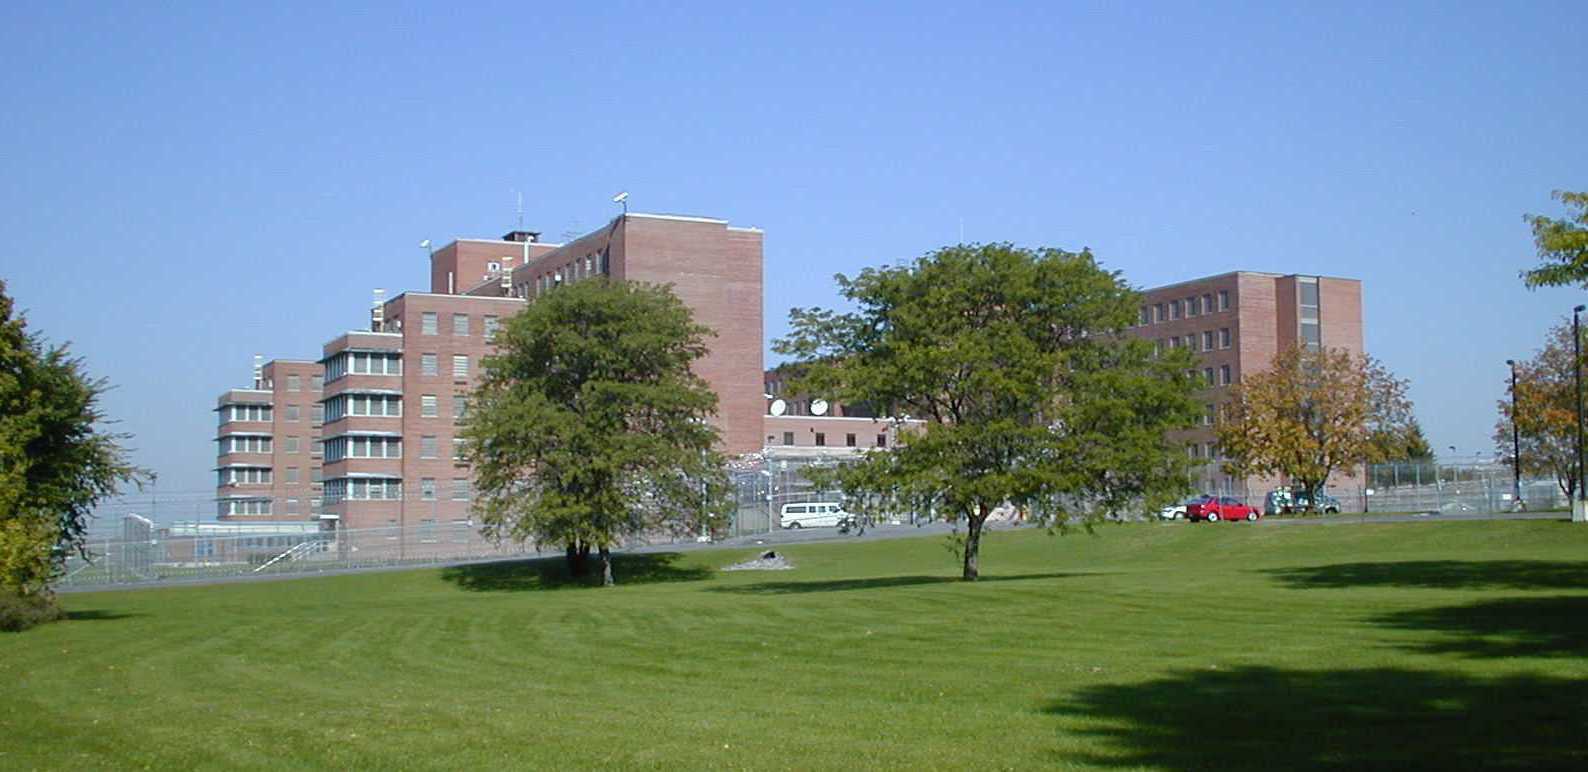 Central New York Psychiatric Center